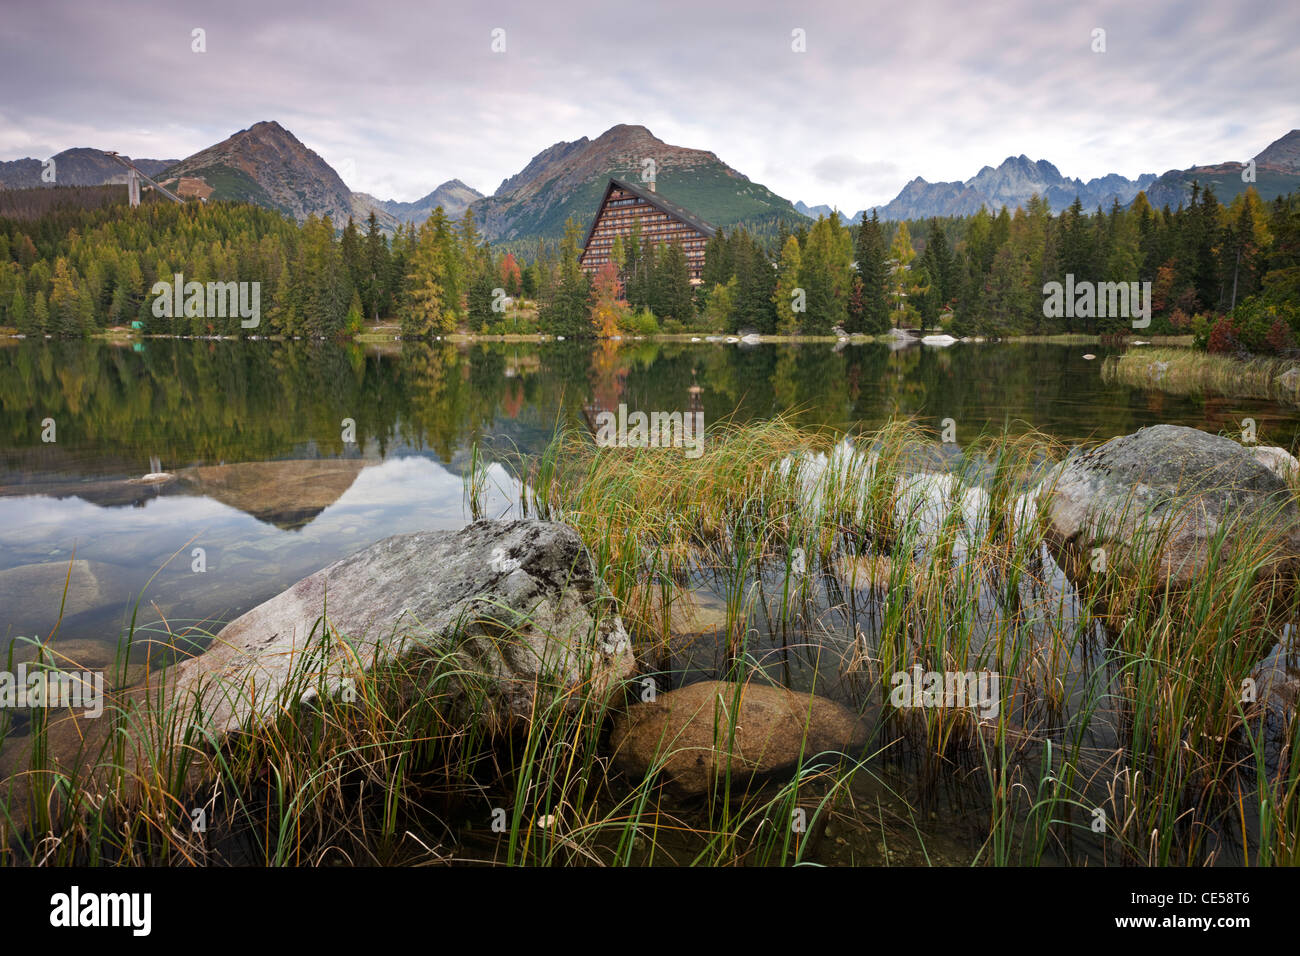 Strbske Pleso Lake in the Tatra Mountains, Slovakia, Europe. Autumn (October) 2011. Stock Photo